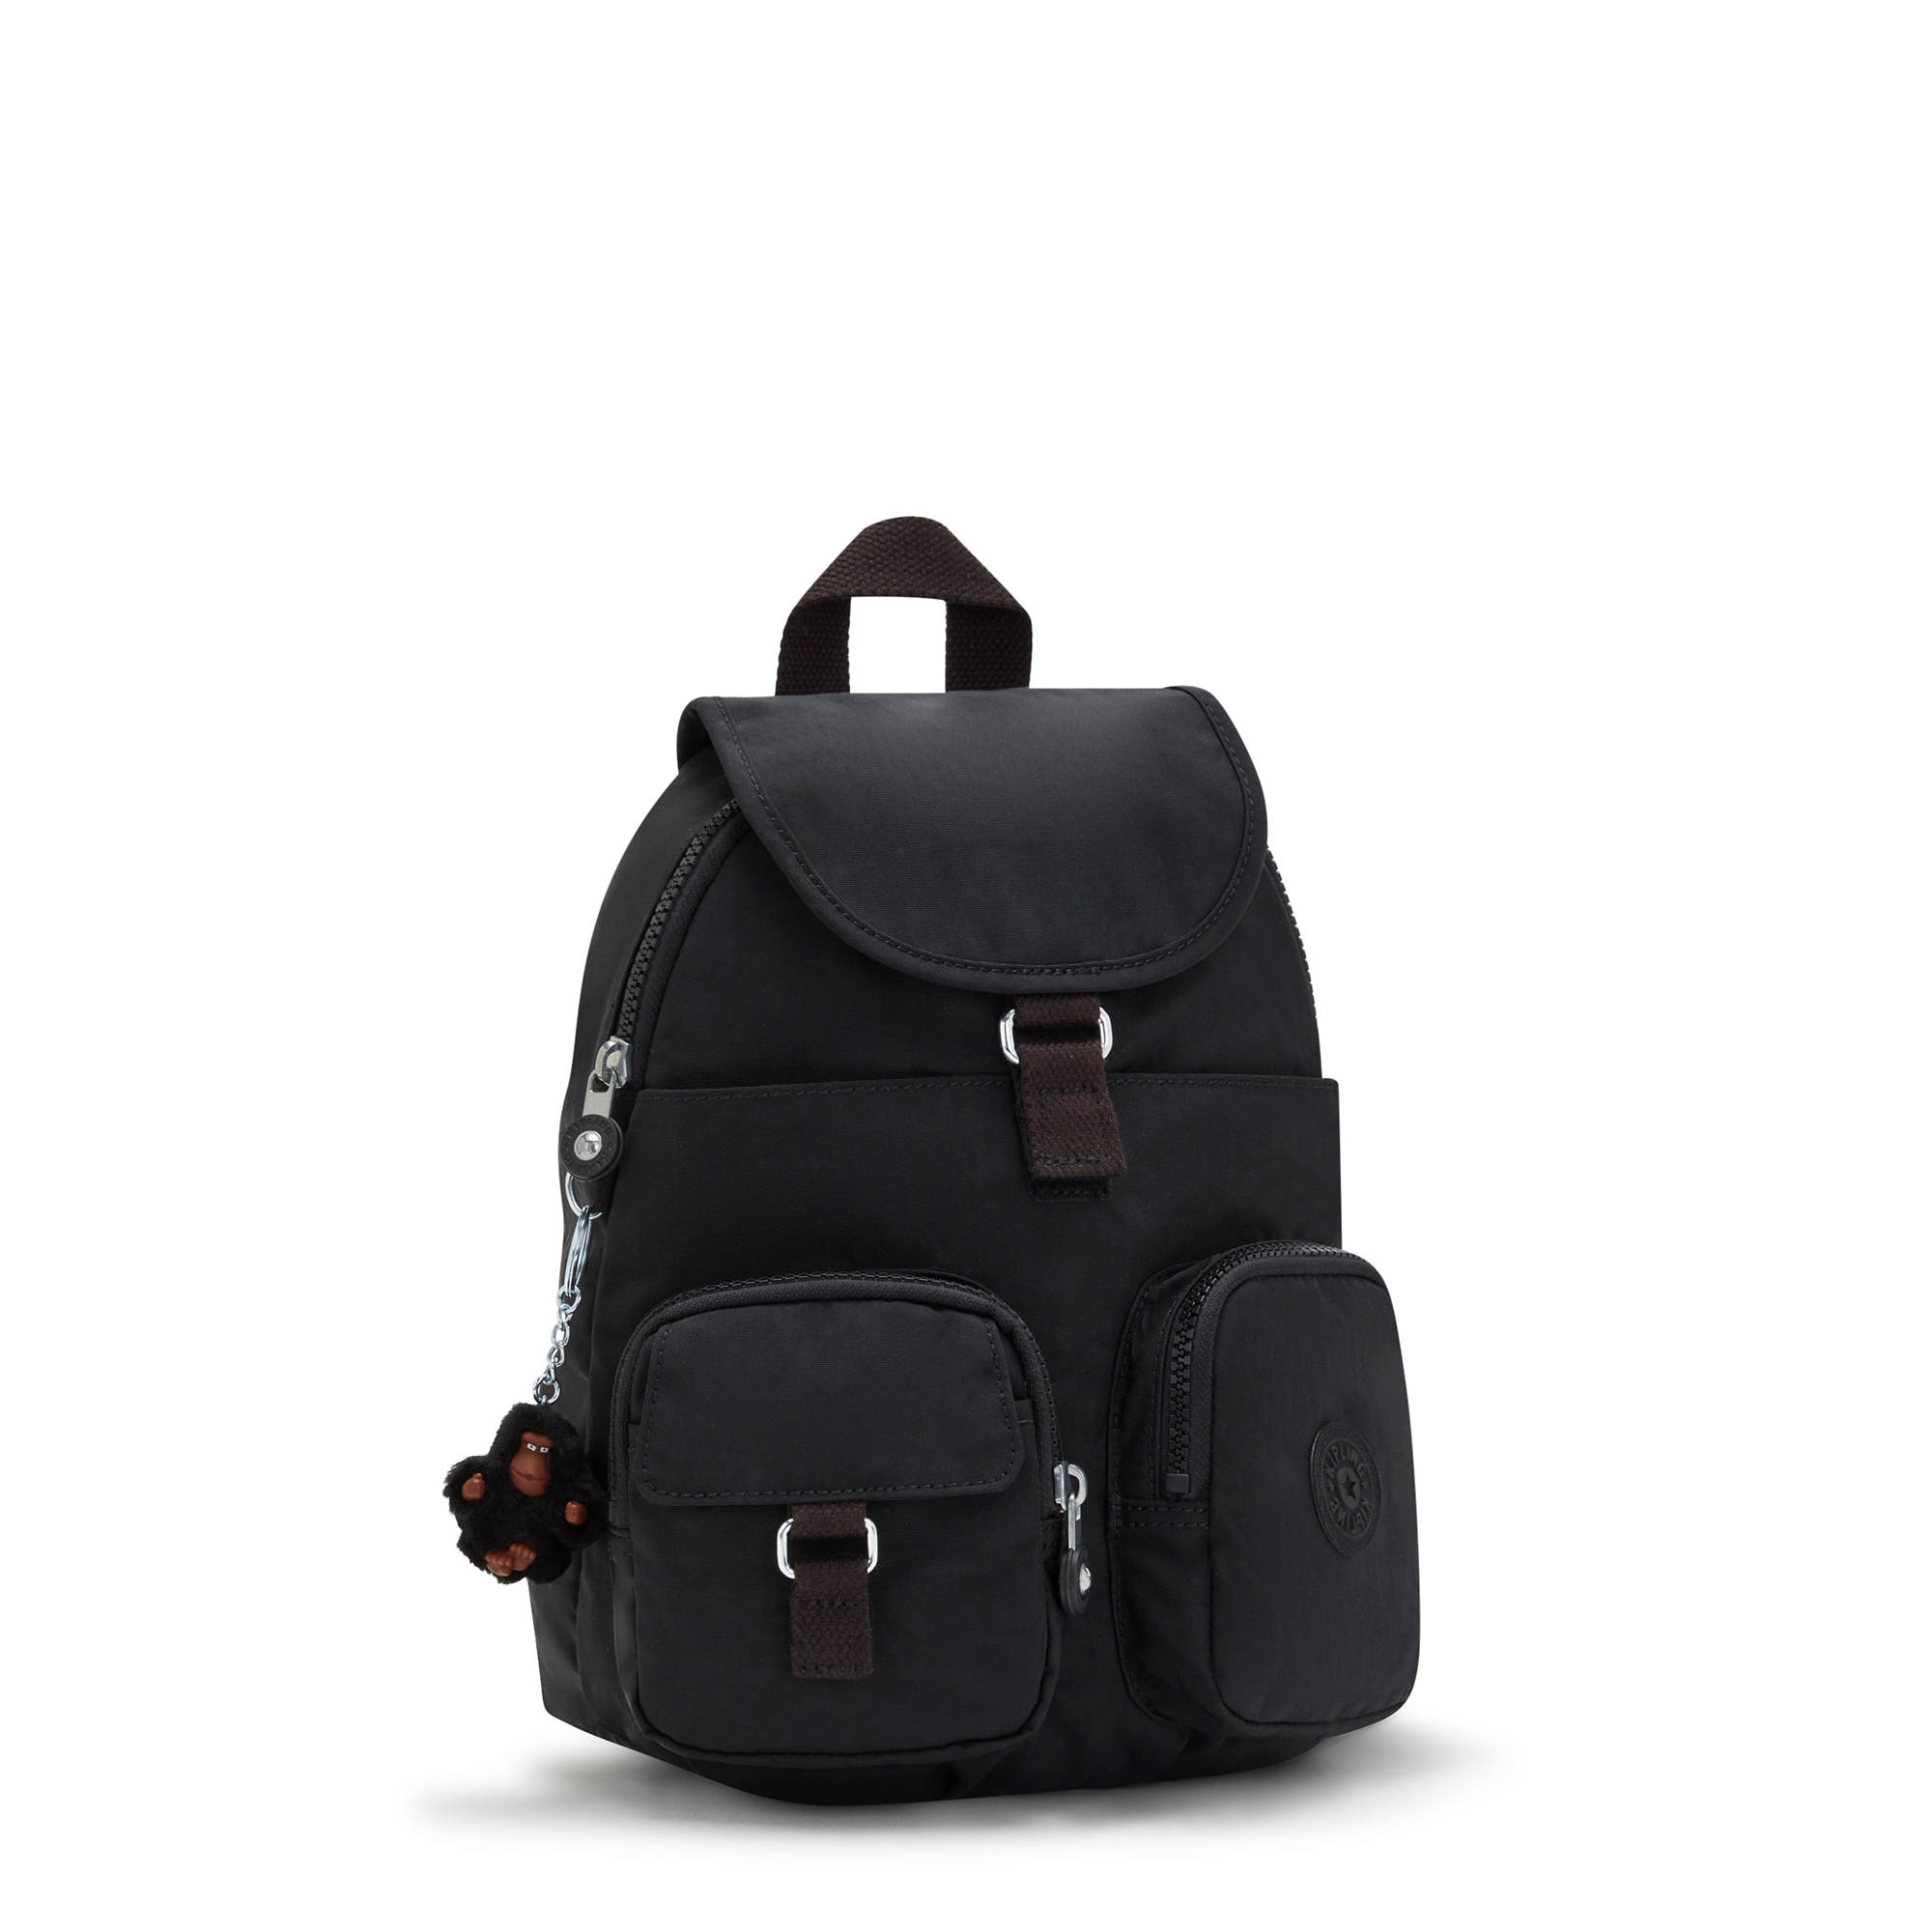 Kipling Lovebug Small Backpack Black Tonal | eBay